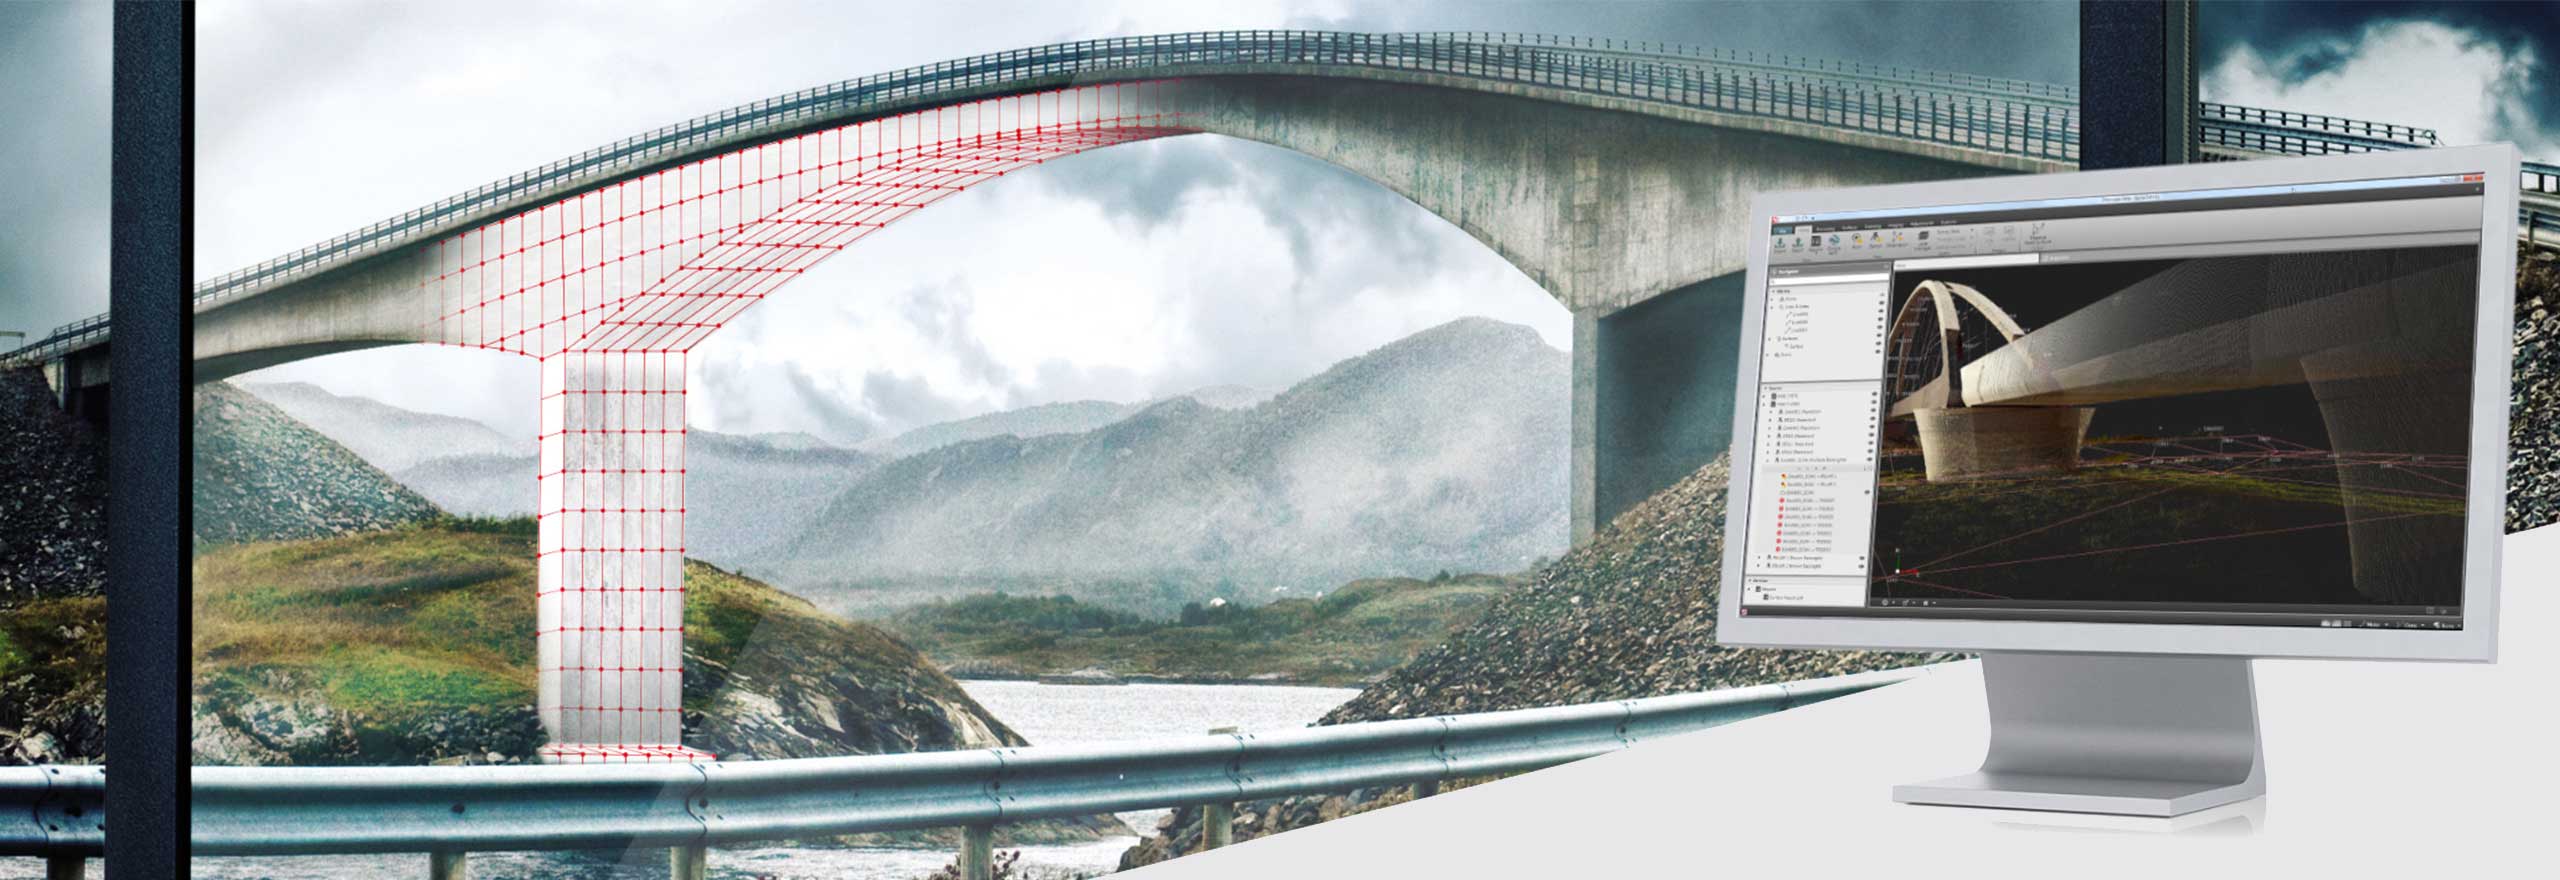 Leica Infinity 測量ソフトウェアで視覚化された橋梁のデジタルモデル 